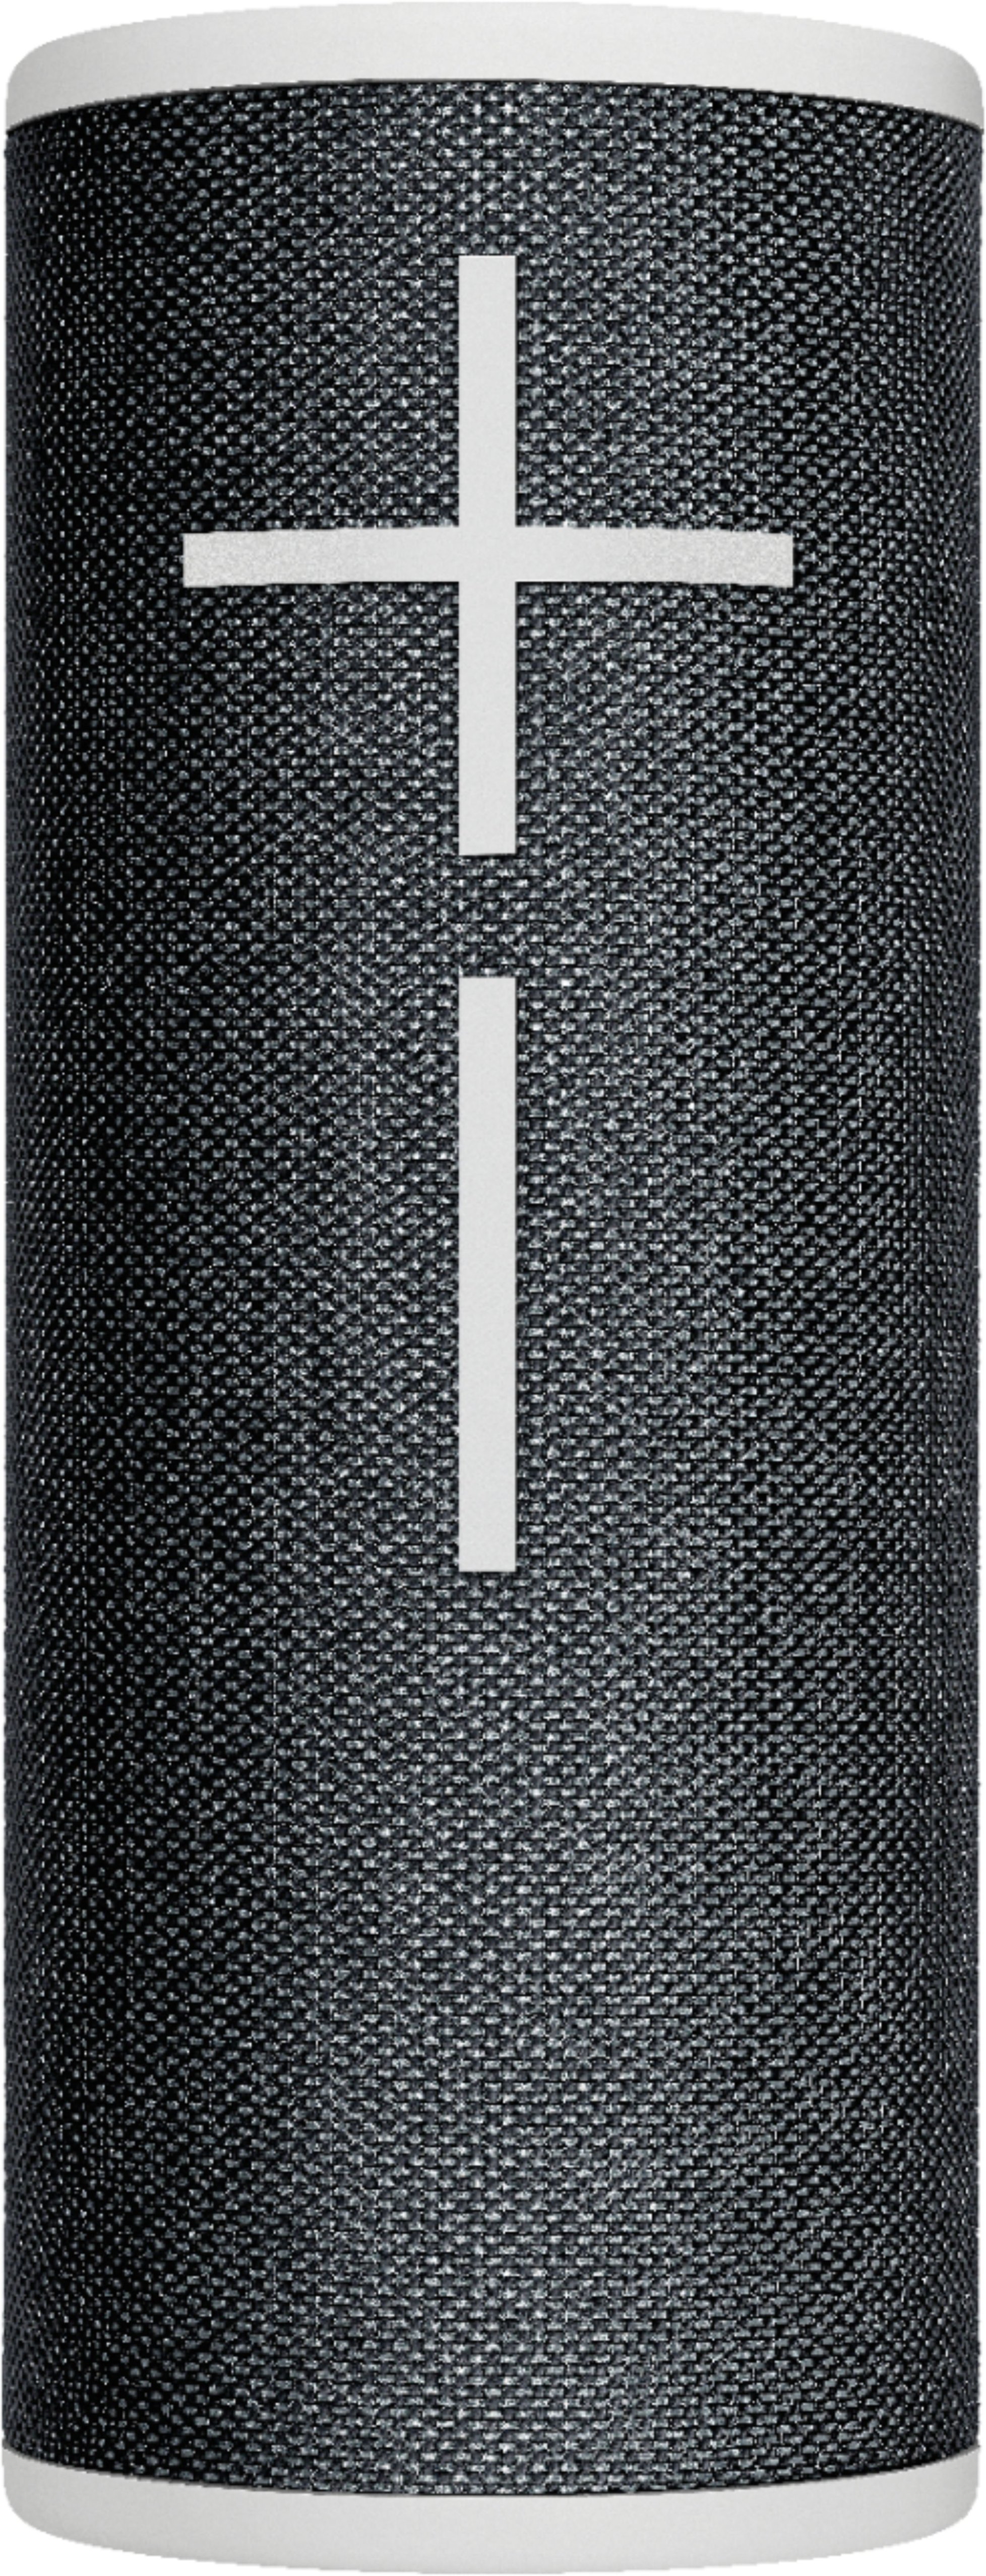 Boomer Speaker Haut Parleur - Modèle 3.1--AK-1403 - NAS00216